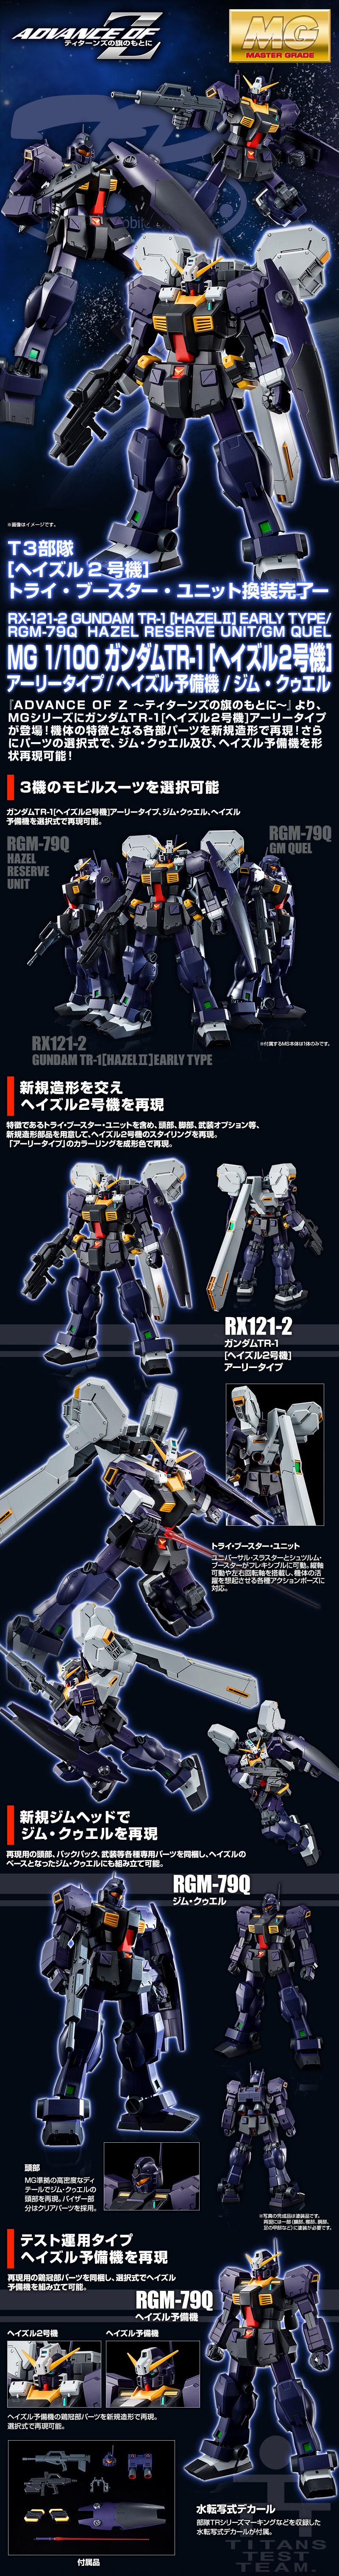 MG Gundam TR-1 Hazel II Details